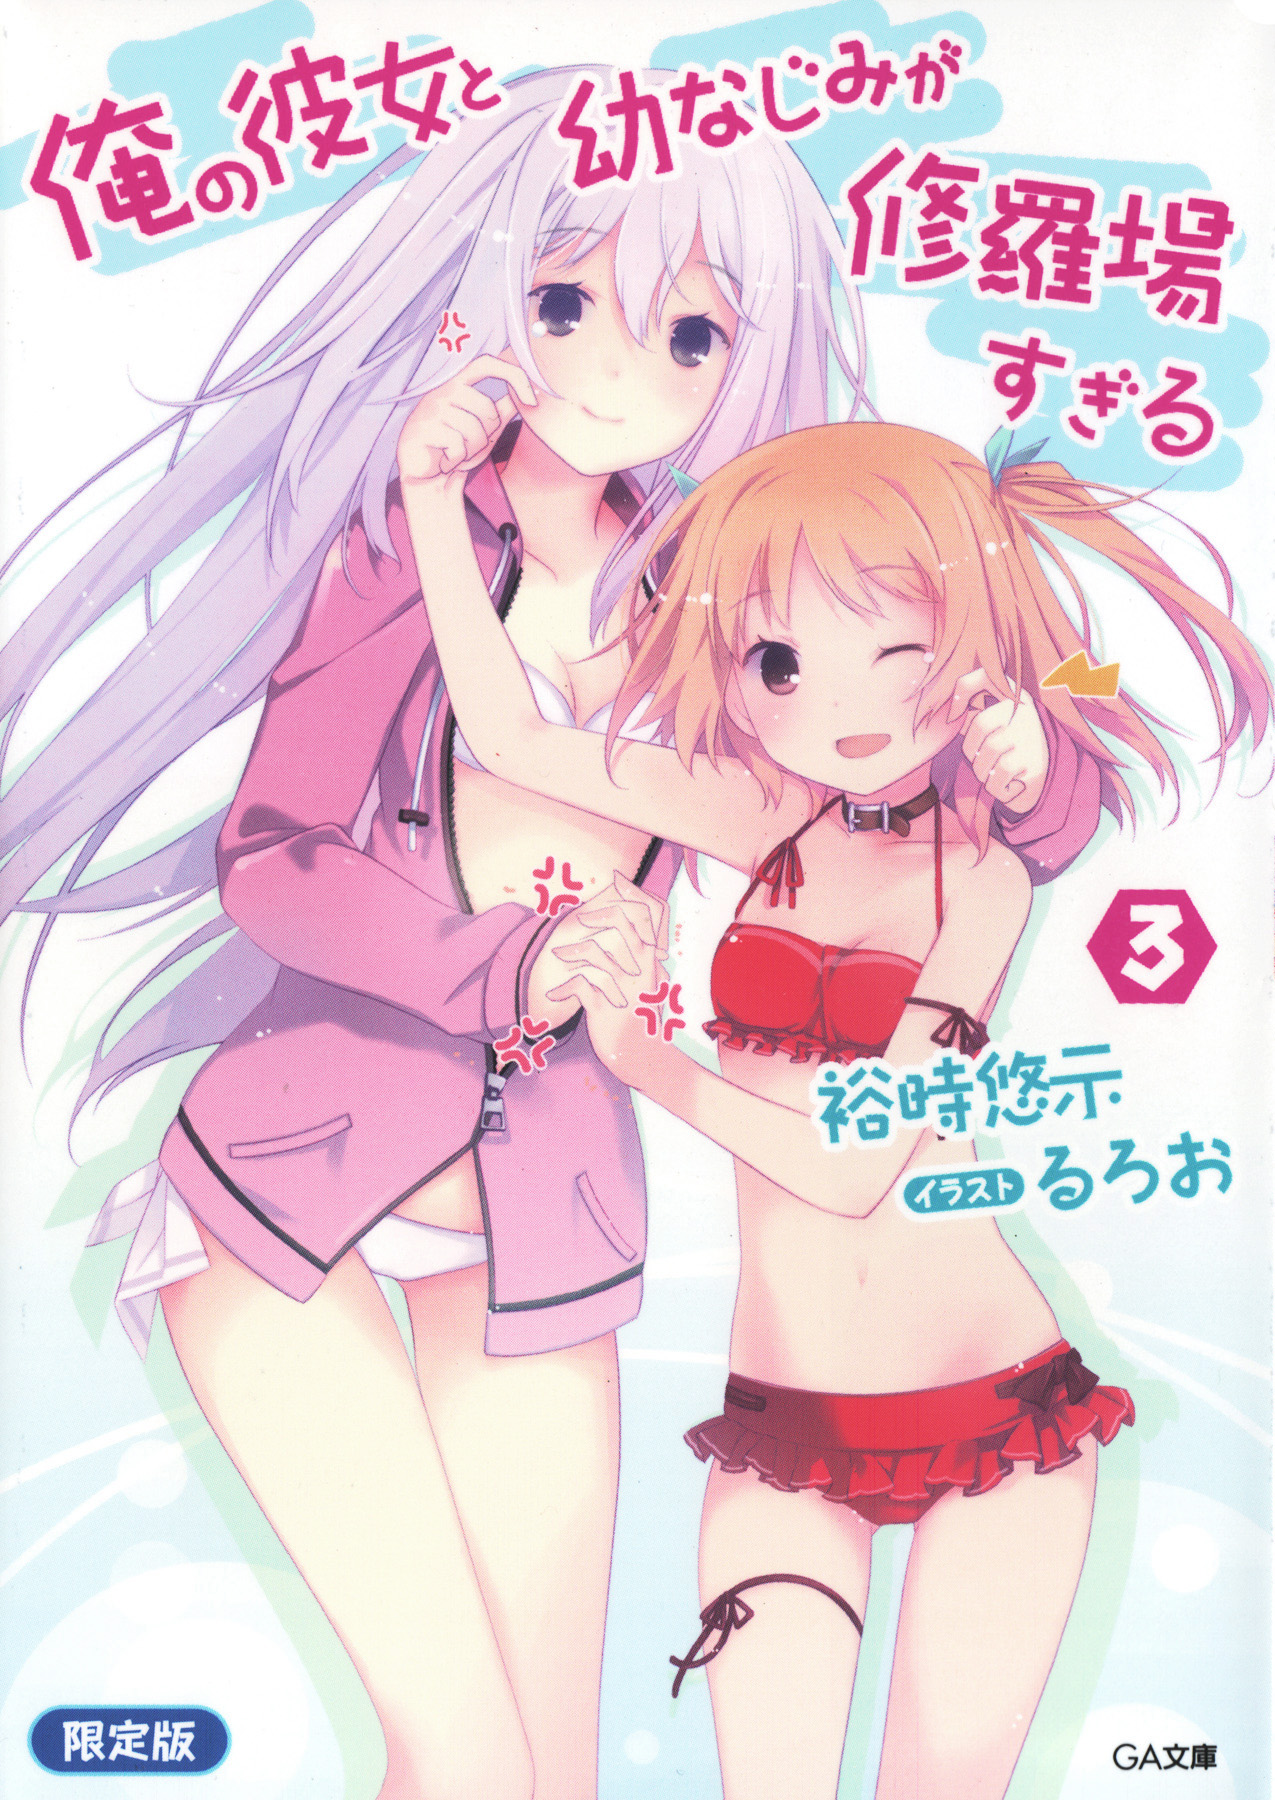 CDJapan : Ore no Kanojo to Osananajimi ga Shuraba Sugiru 12 [w/ Drama CD,  Special Edition] [Light Novel] Yuji Yuji, Ruroo BOOK